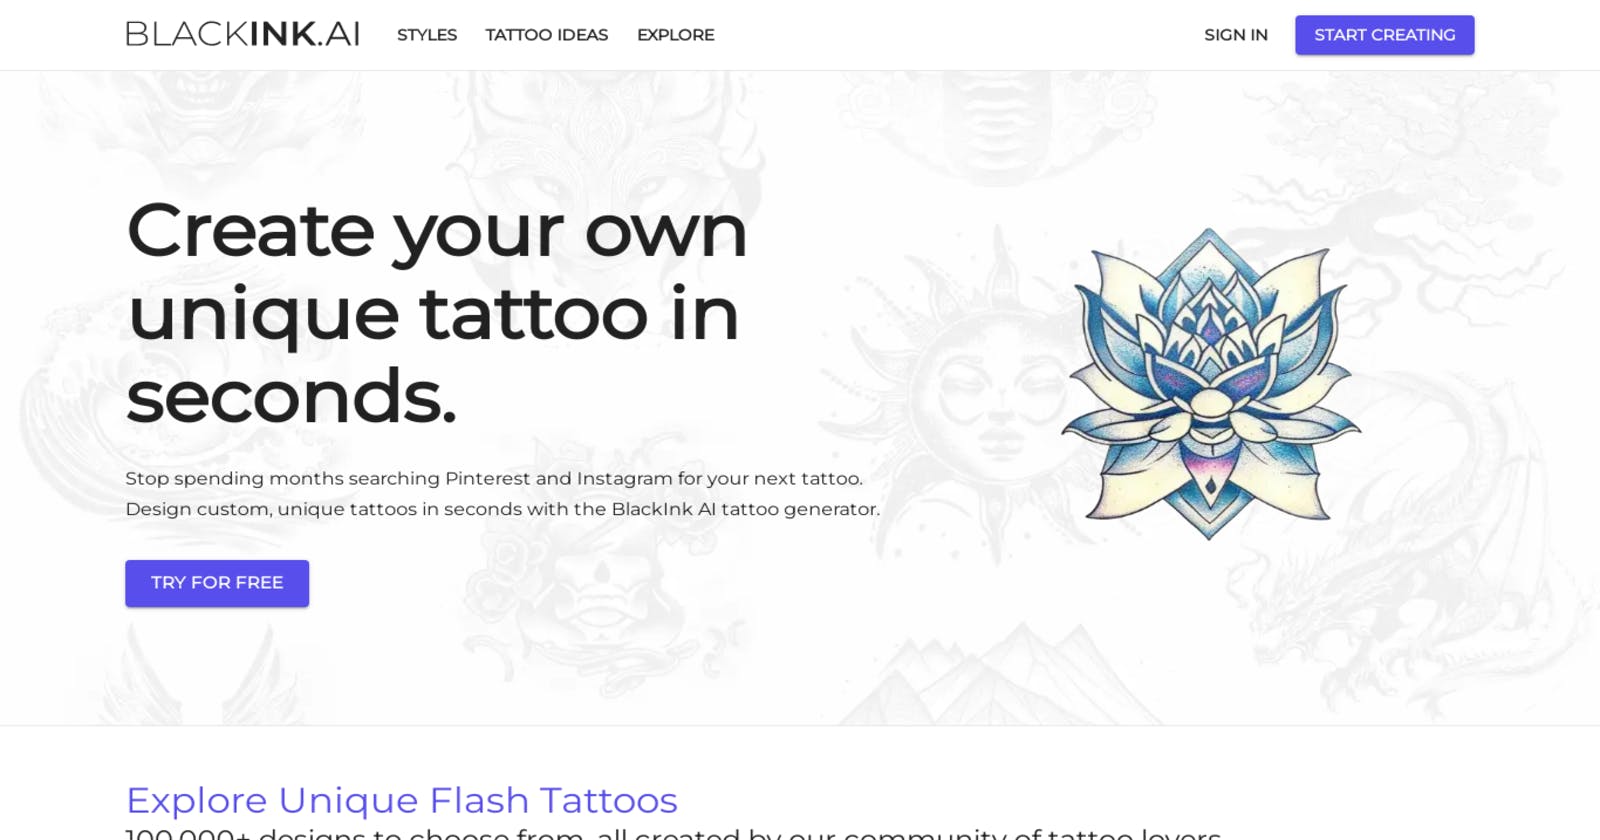 BlackInk.AI: Your Tattoo Design Companion - Create Unique Tattoos in Seconds!